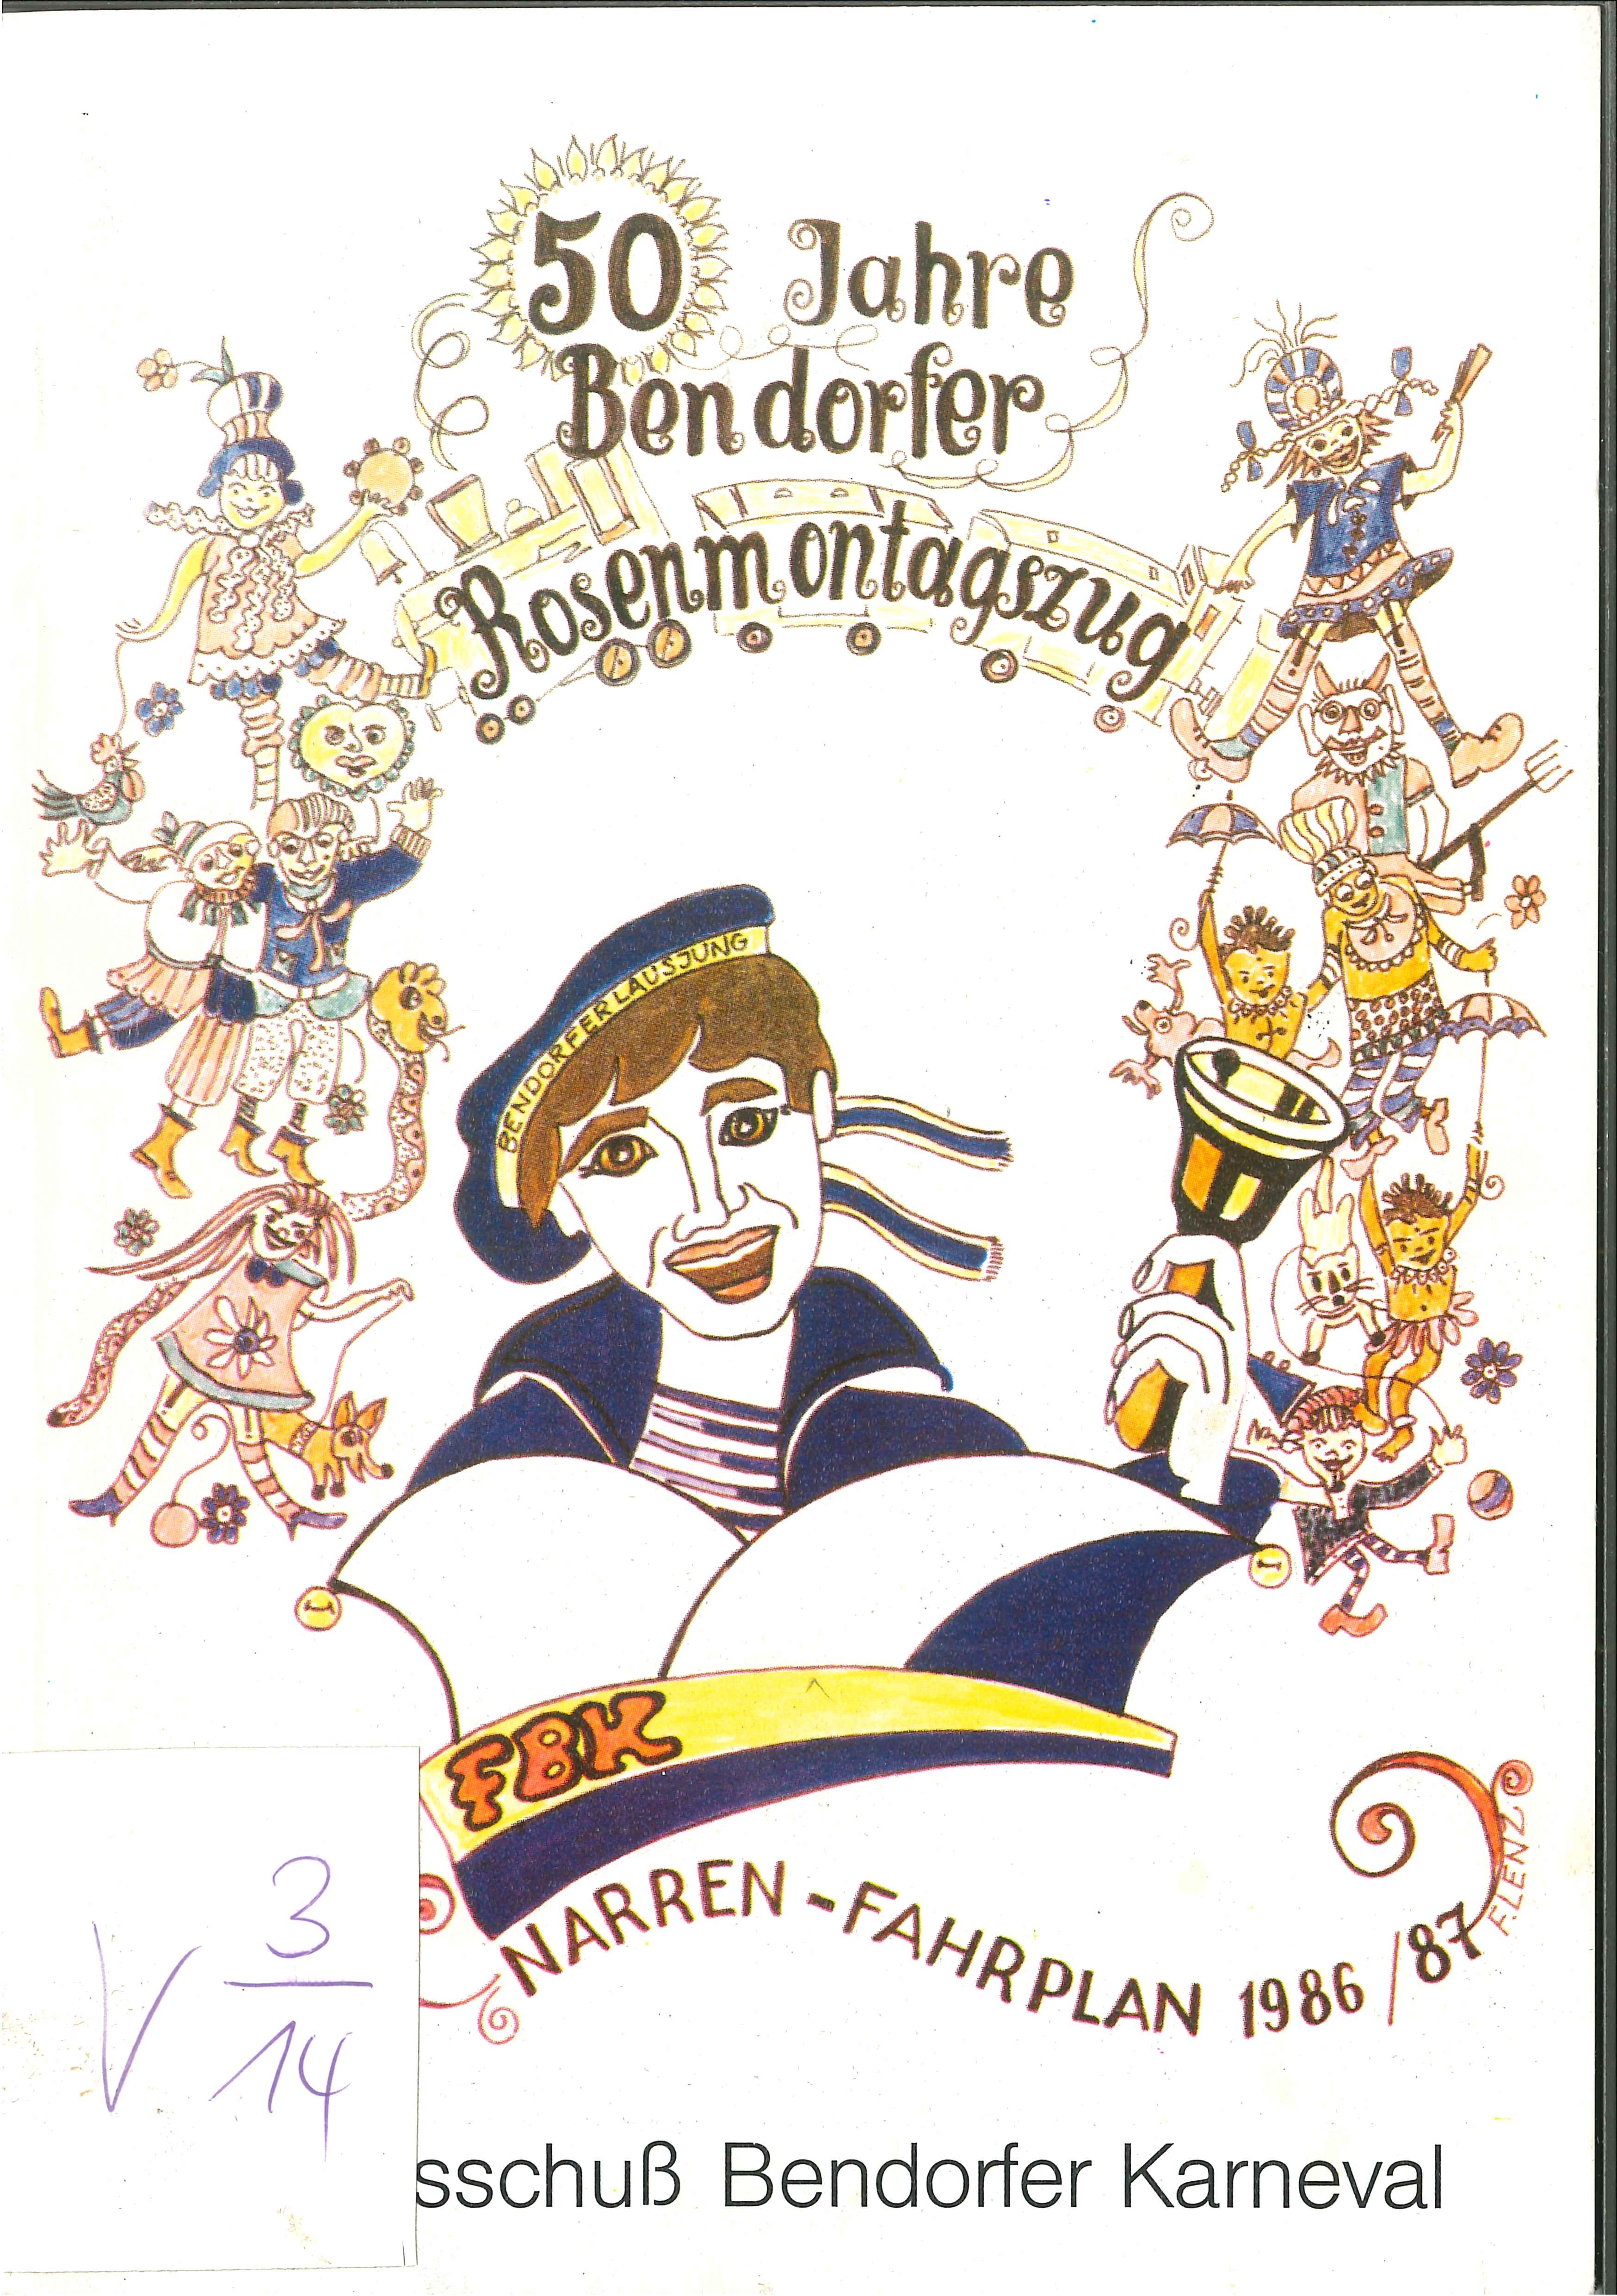 Narrenfahrplan Festausschuss Bendorfer Karneval, 1986/87 (Rheinisches Eisenkunstguss-Museum CC BY-NC-SA)